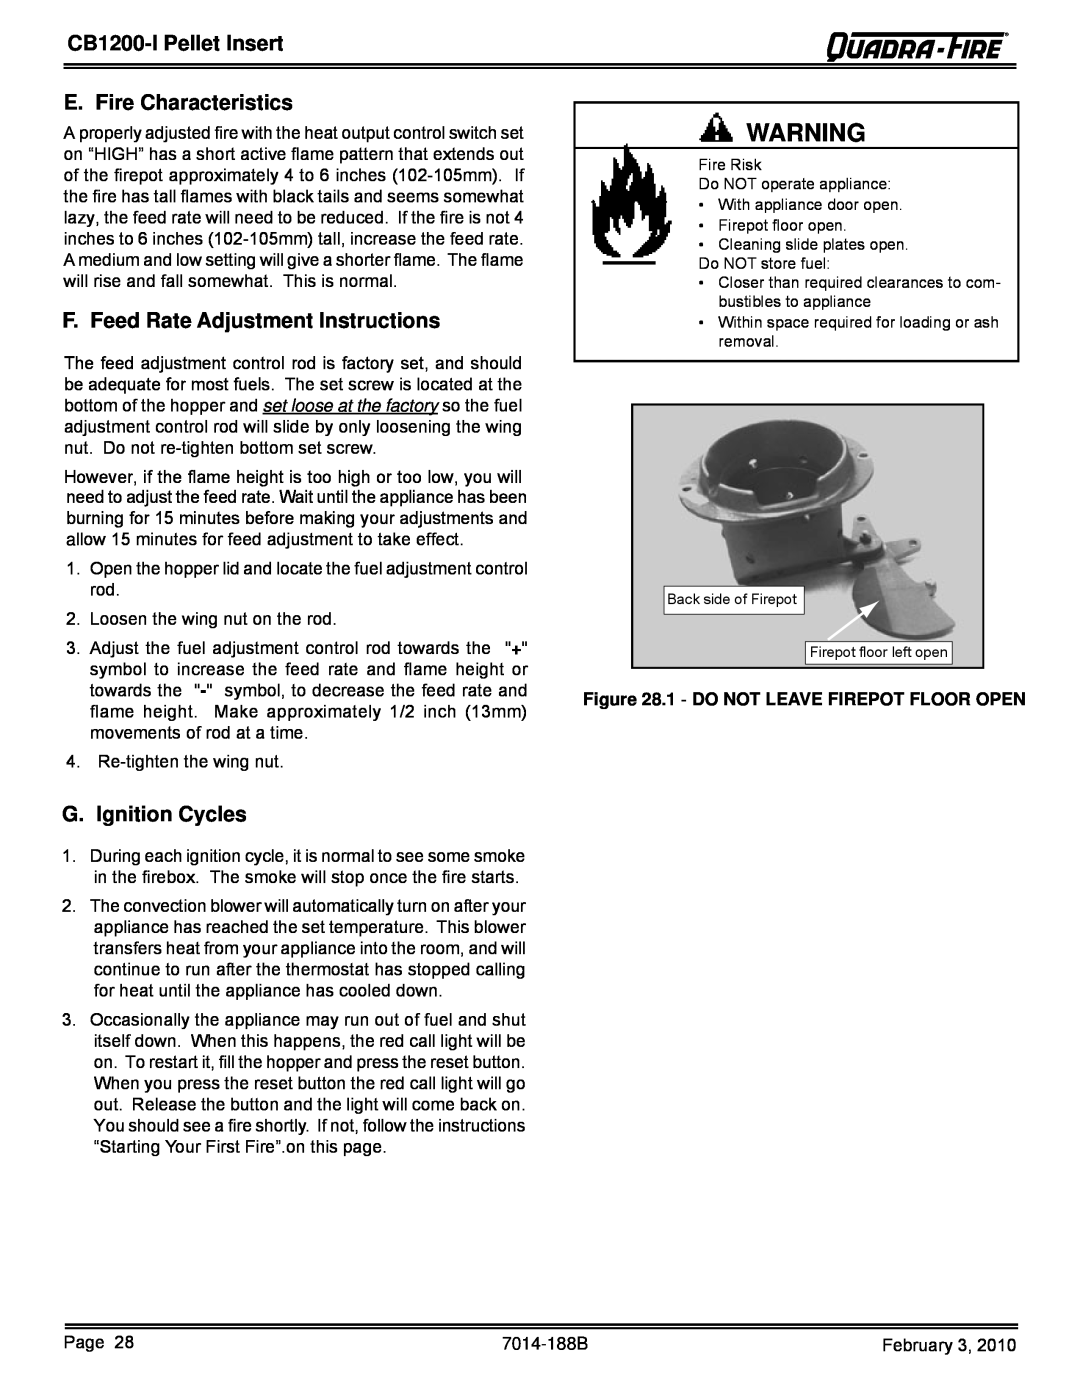 Quadra-Fire CB1200I, CB1200MI-MBK E. Fire Characteristics, F. Feed Rate Adjustment Instructions, G. Ignition Cycles 